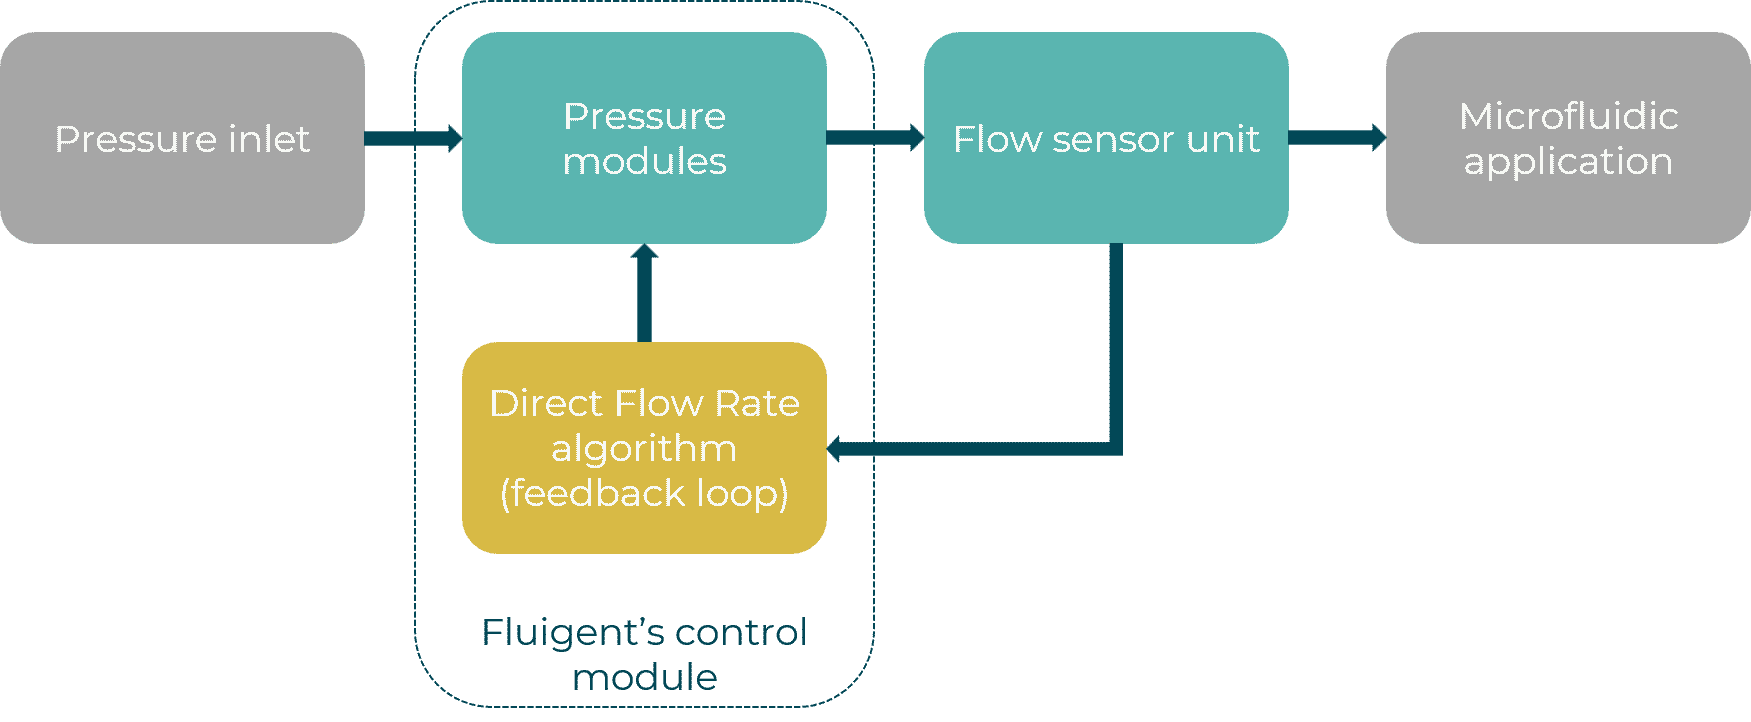 operating principle of the DFC microfluidic flow rate control algorithm